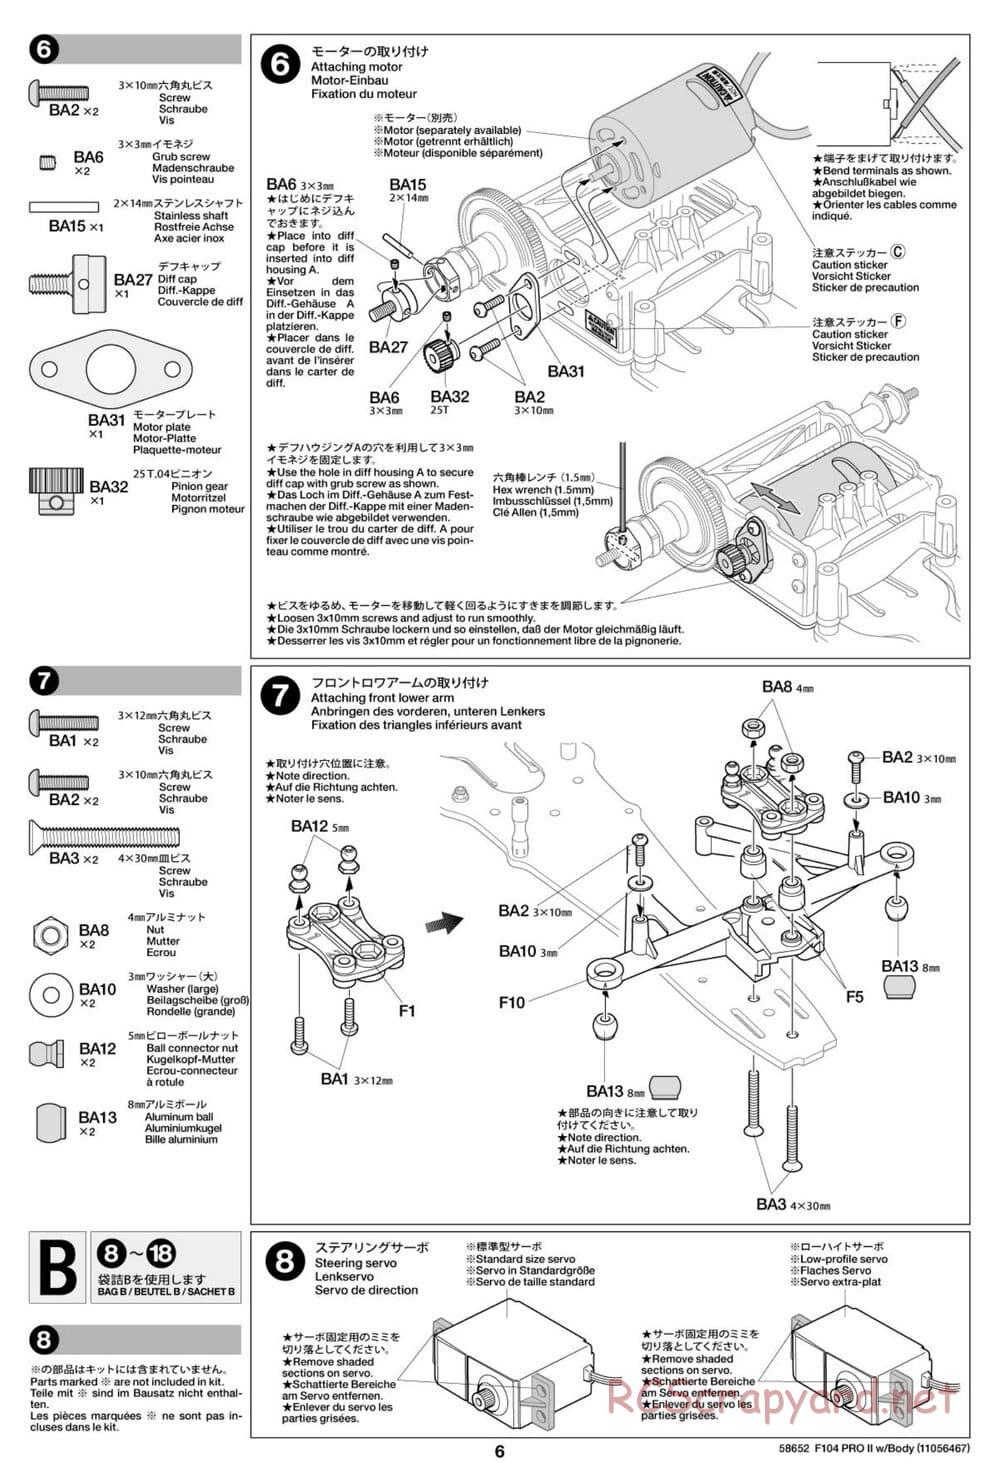 Tamiya - F104 Pro II Chassis - Manual - Page 6